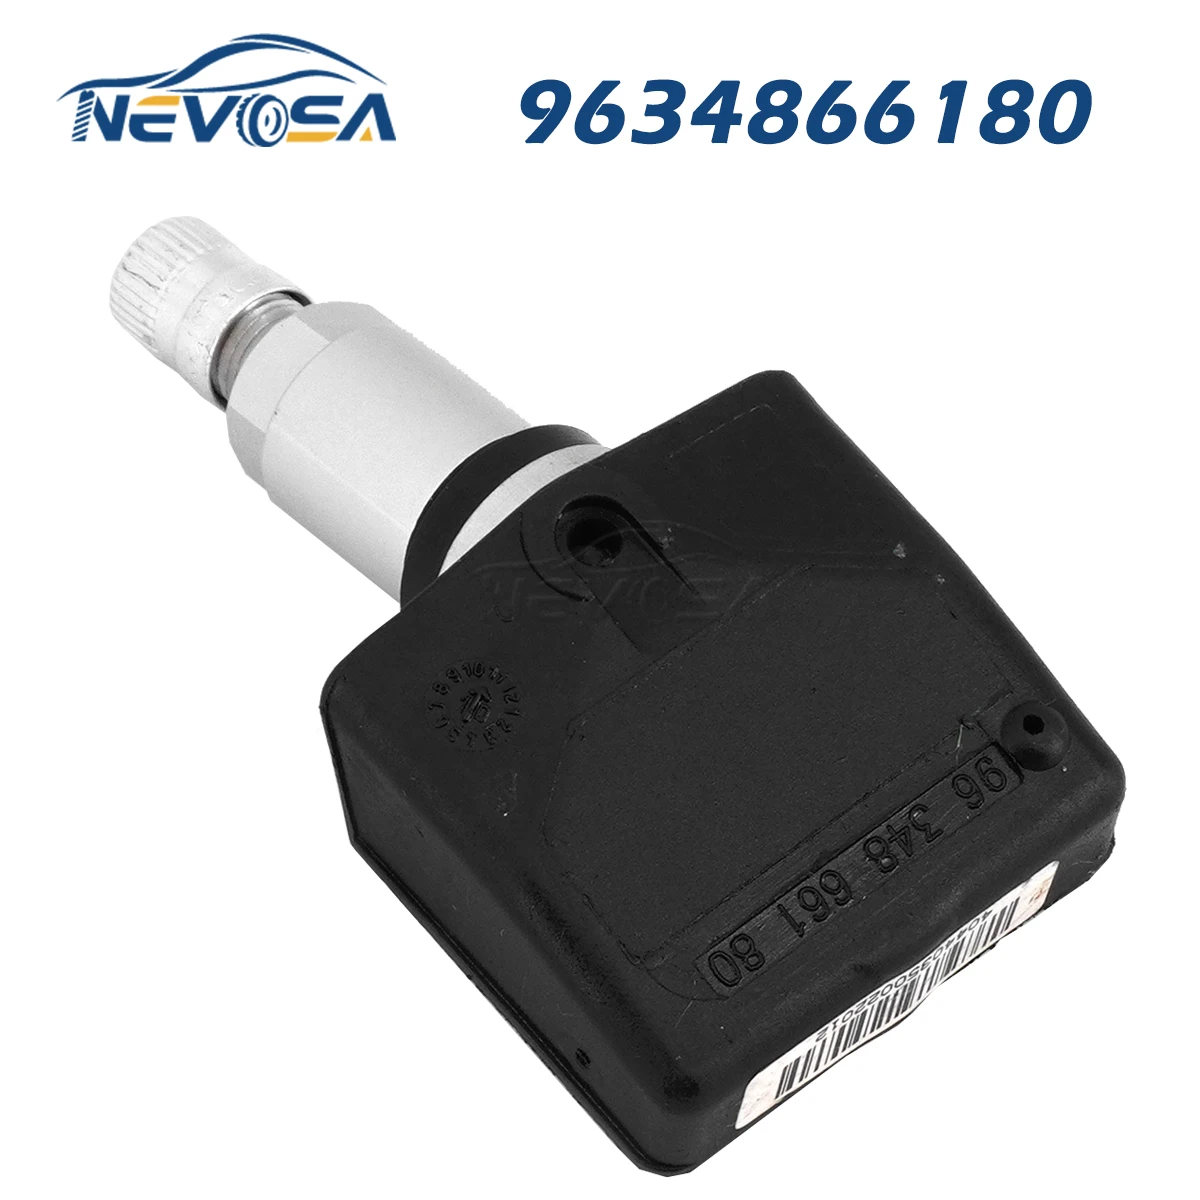 

NEVOSA 9634866180 543002 Tire Pressure Monitoring System TPMS Sensor For Citroen C5 C8 Peugeot 607 807 Fiat Ulysse 433MHz